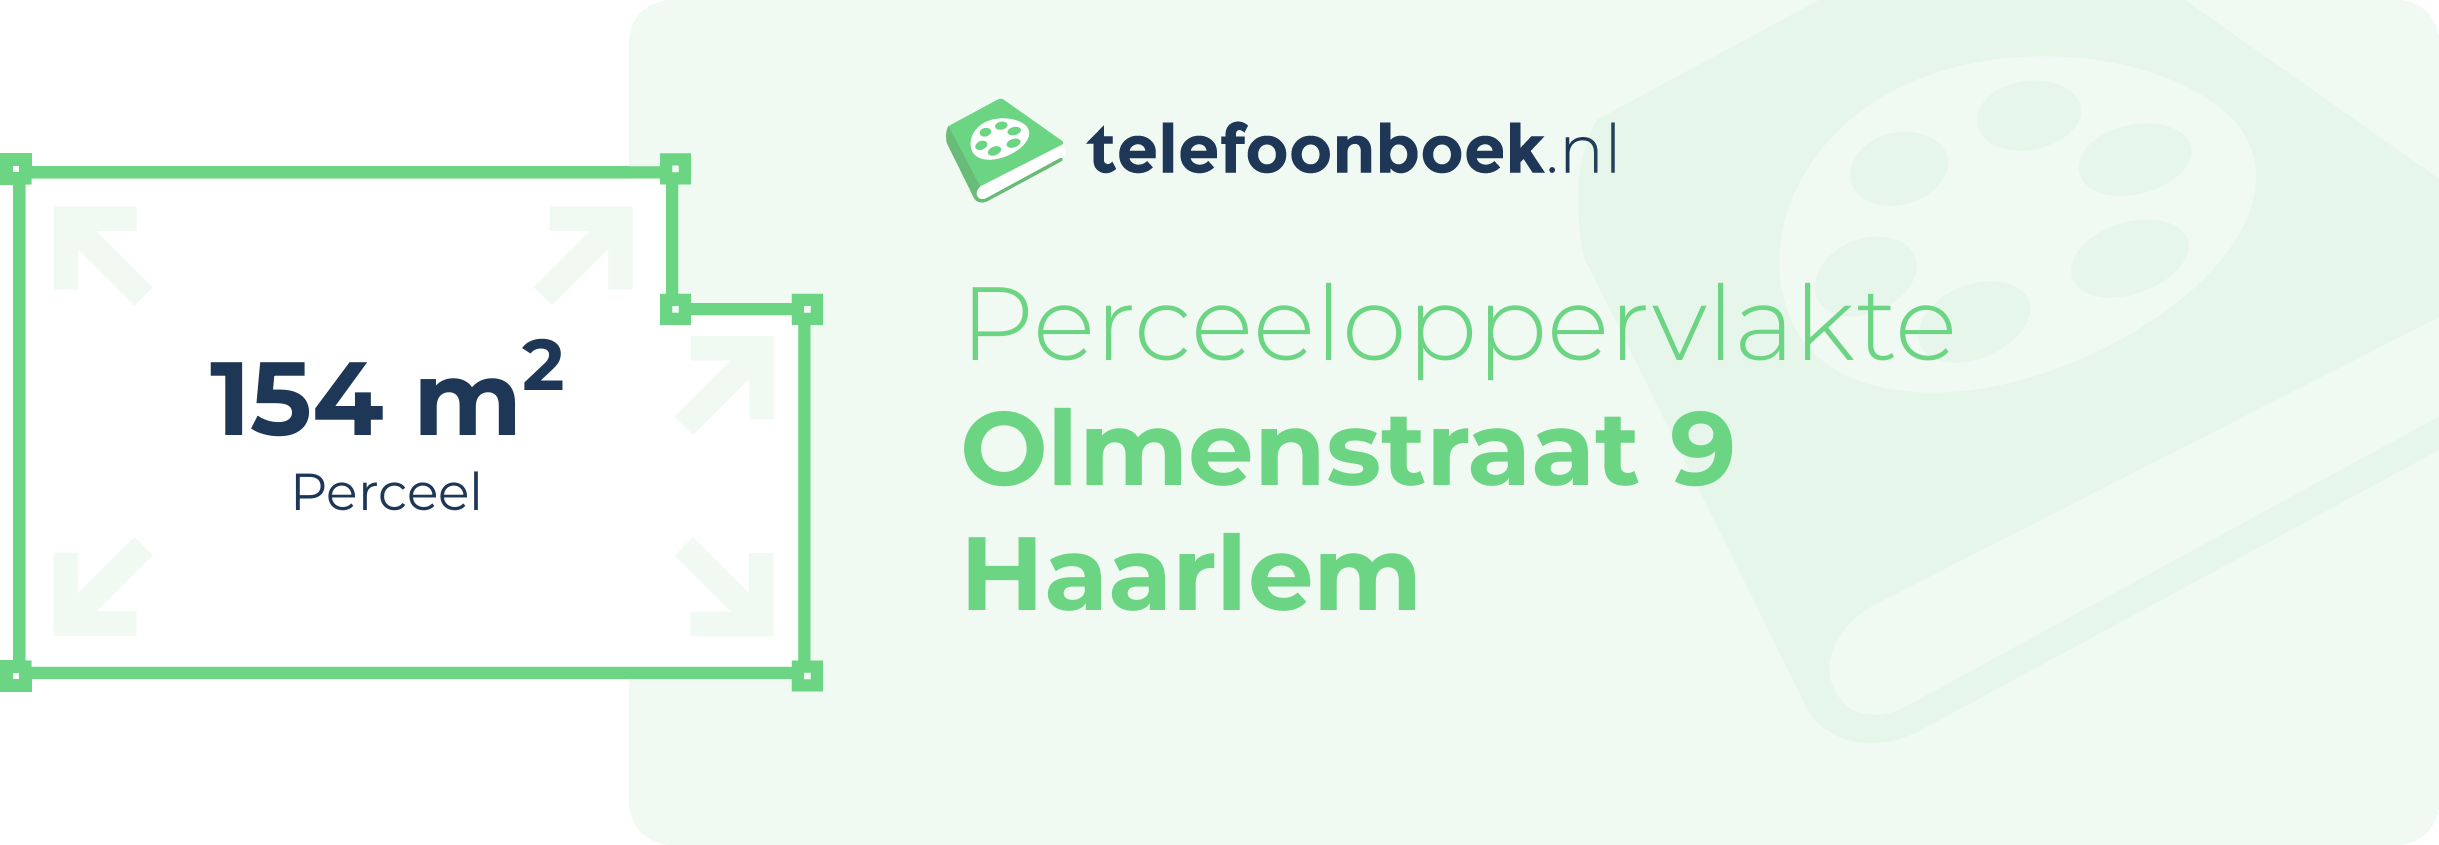 Perceeloppervlakte Olmenstraat 9 Haarlem